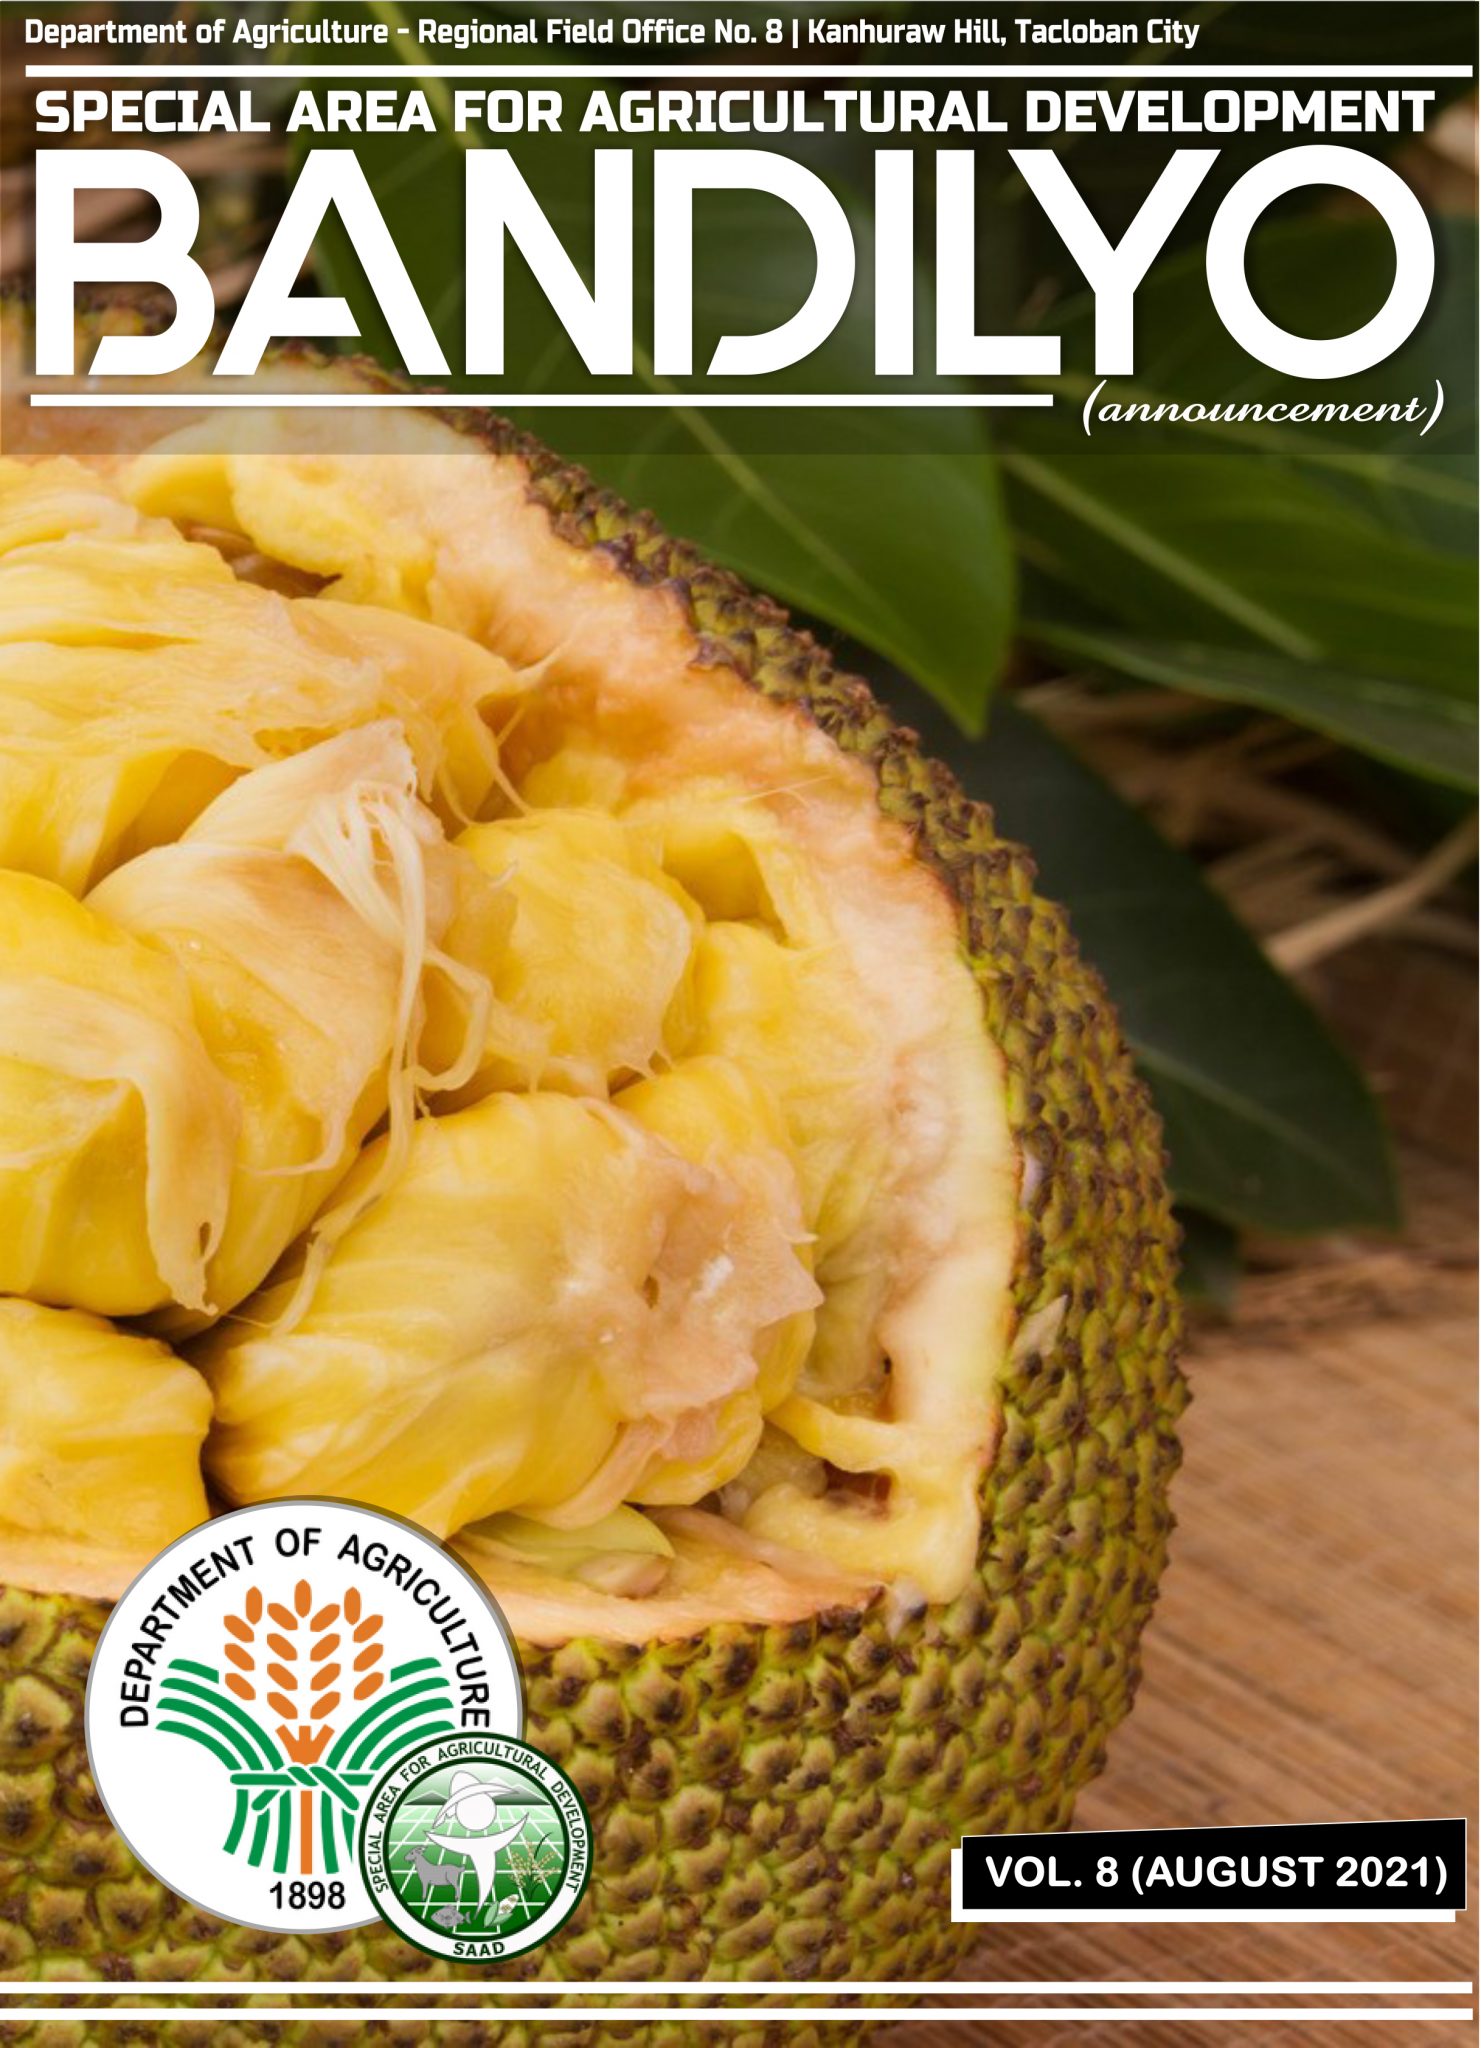 Bandilyo Issue No. 8 Series 2021